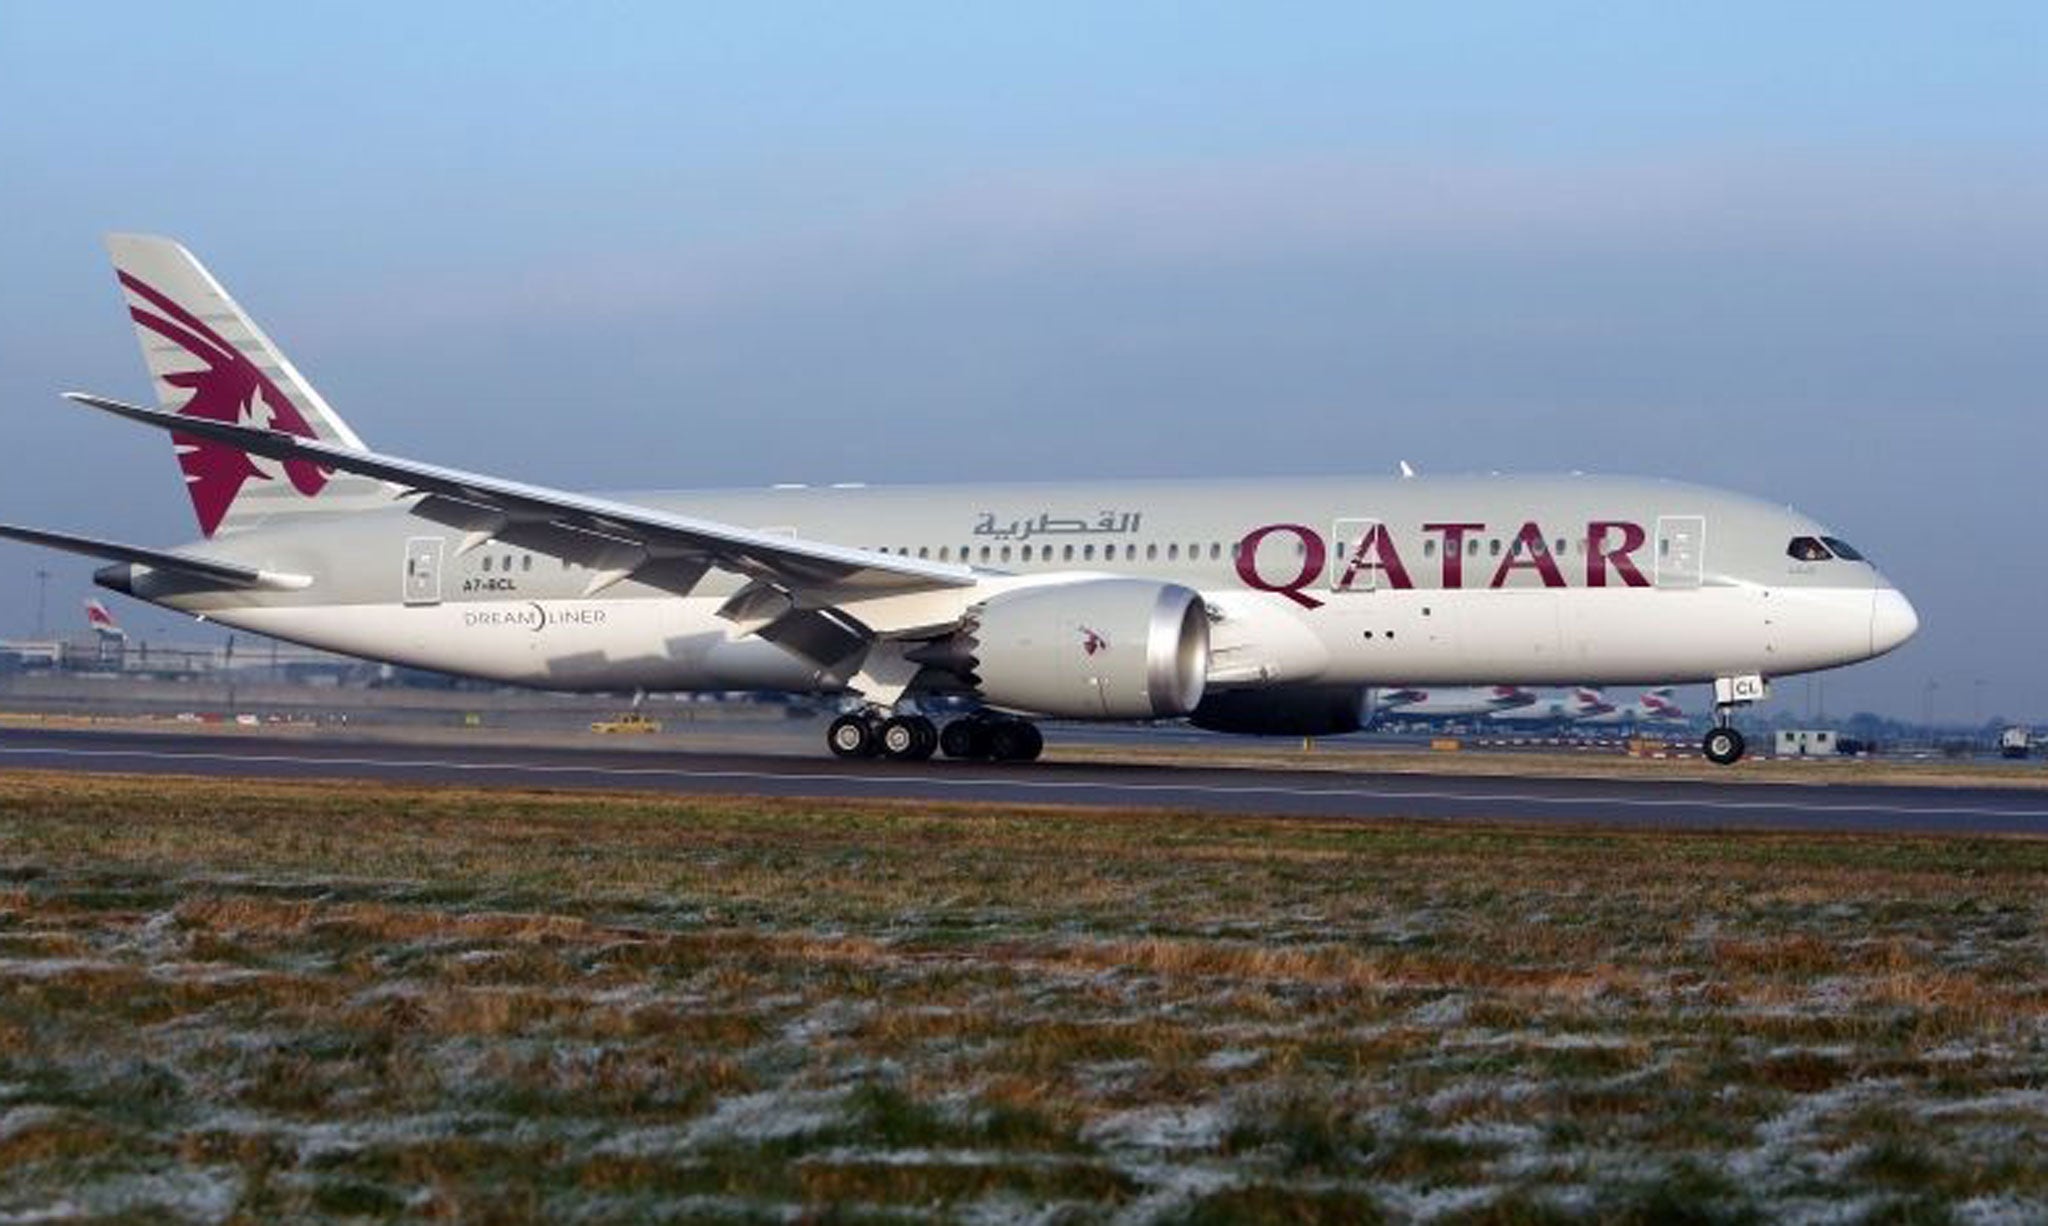 A Qatar Airways 787 Dreamliner arriving at Heathrow Airport